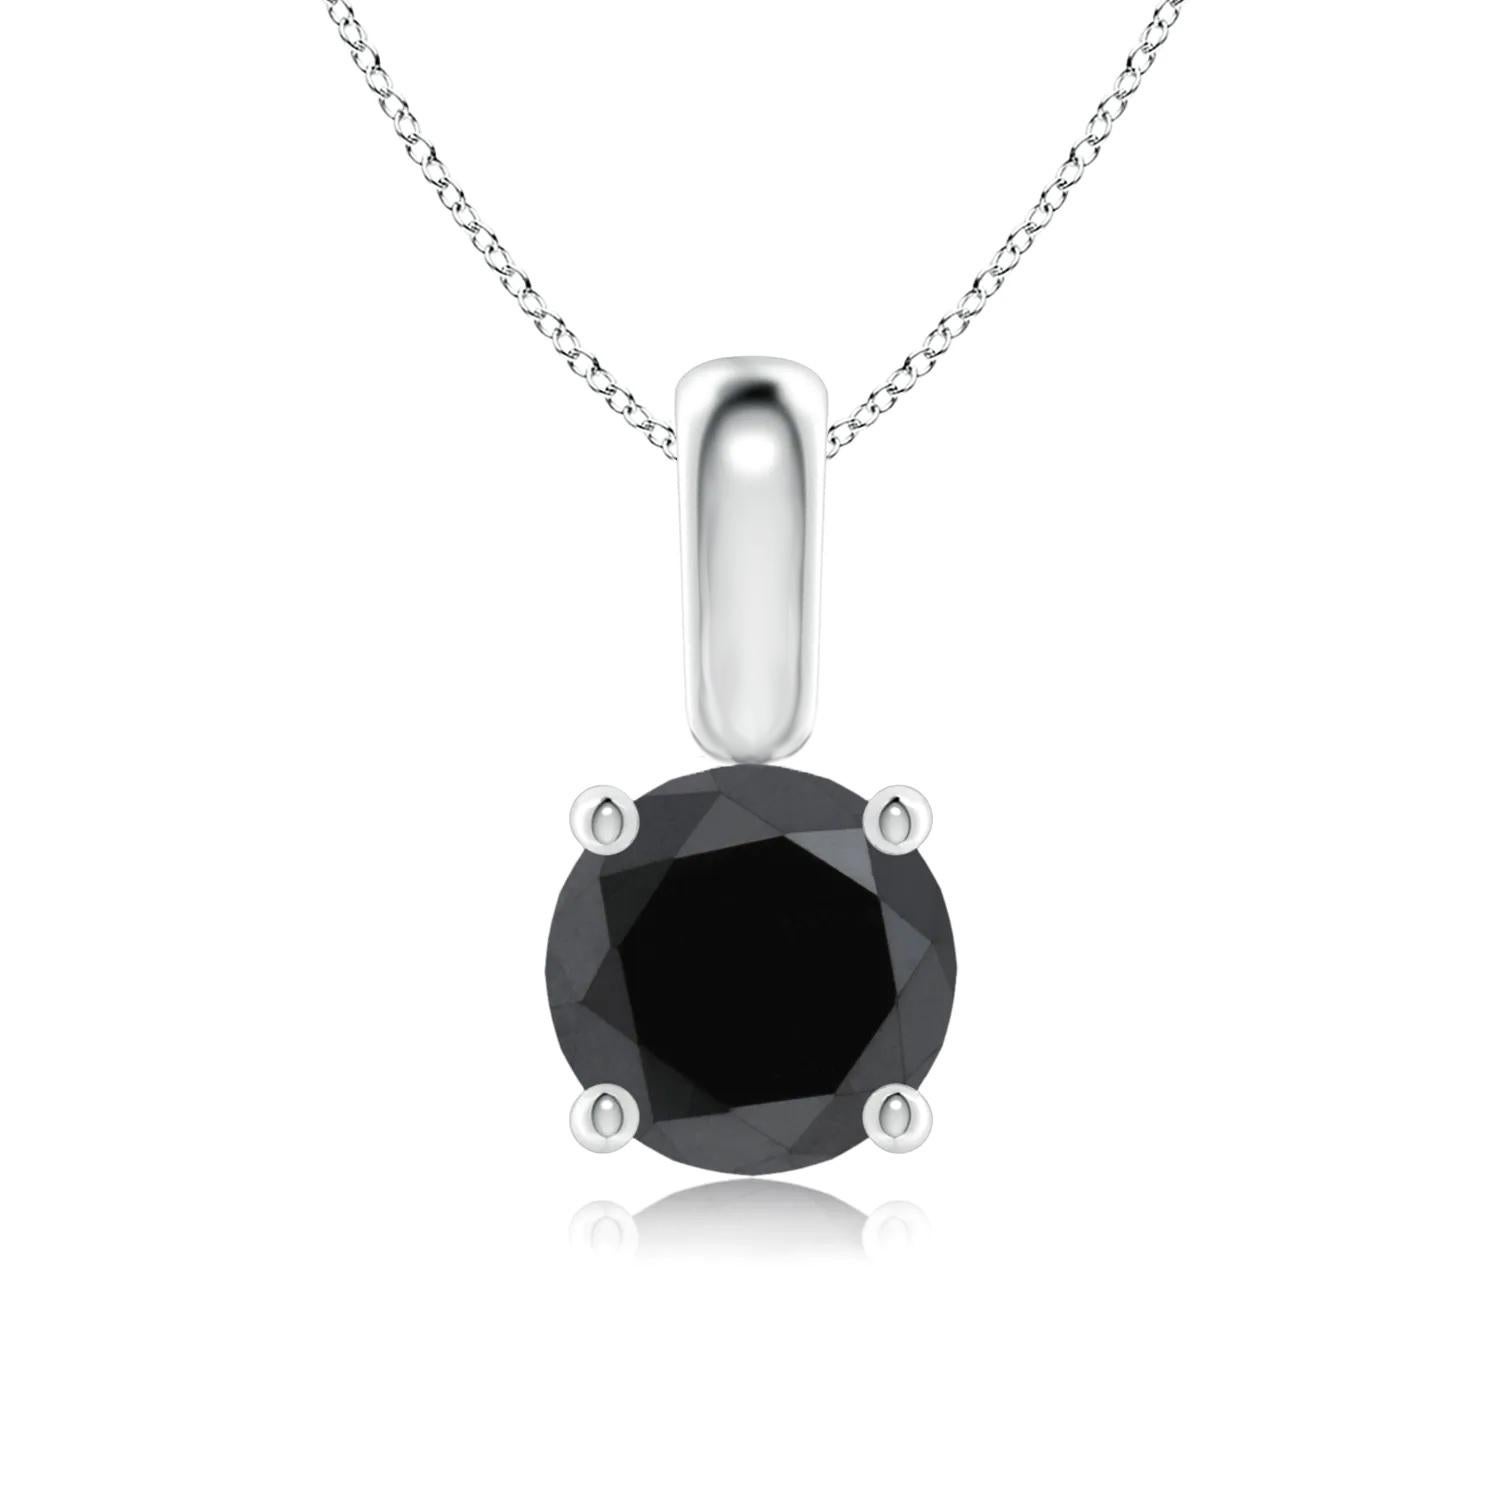 Contemporary 1.56 Carat Round Black Diamond Solitaire Pendant Necklace in 14K White Gold